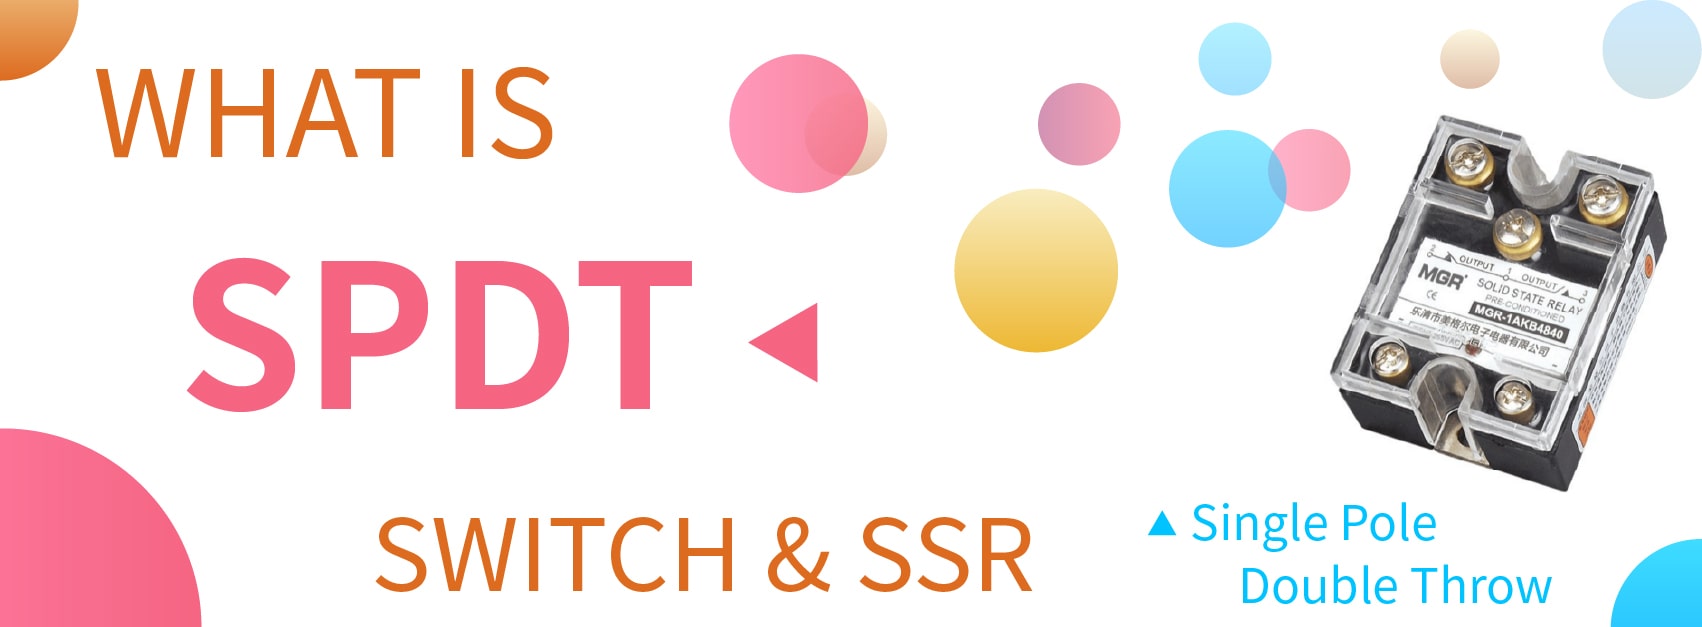 SPDT 스위치 및 SPDT SSR은 무엇입니까? banner